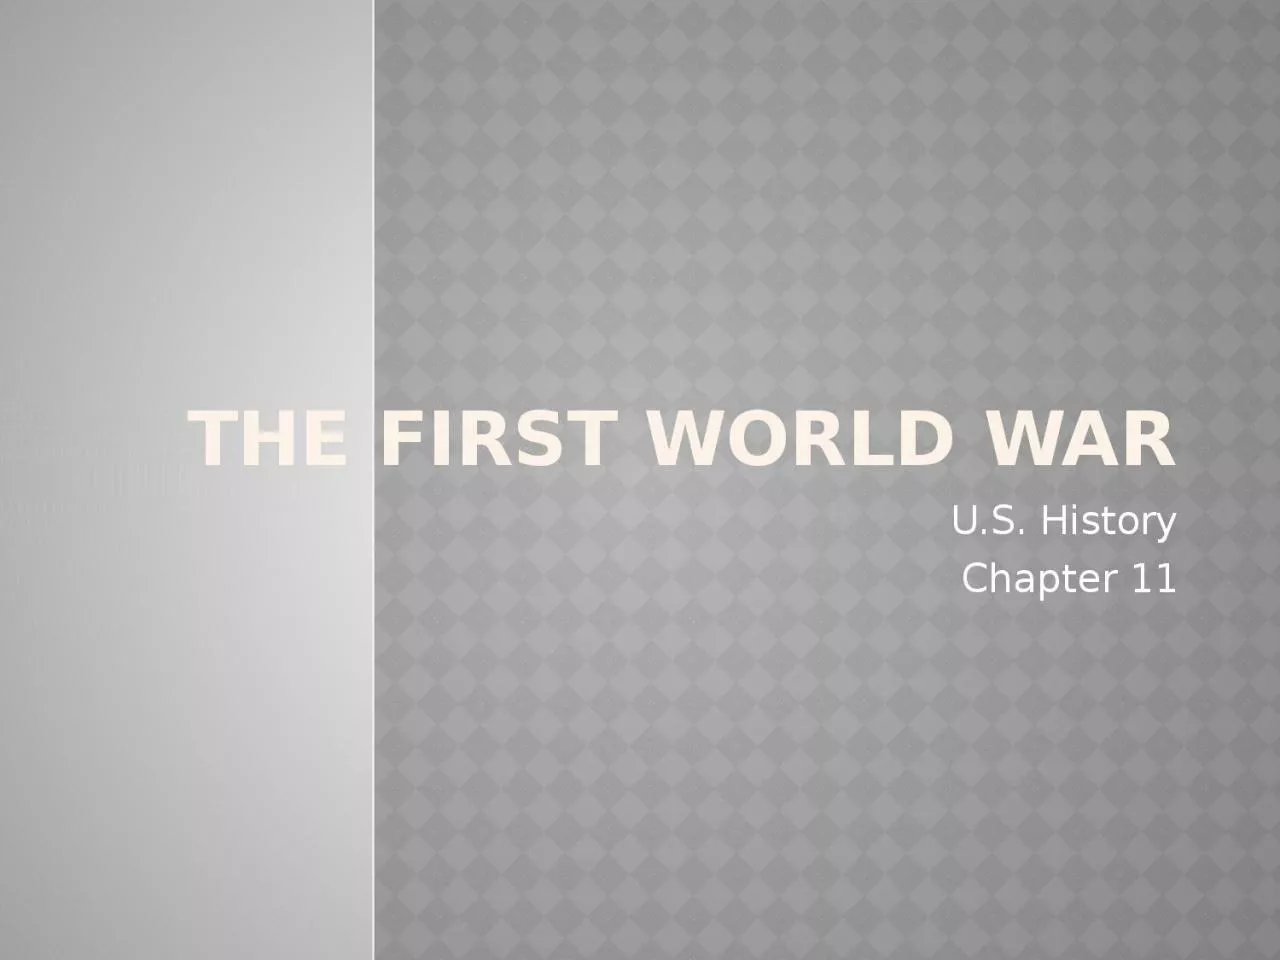 The First World War U.S. History